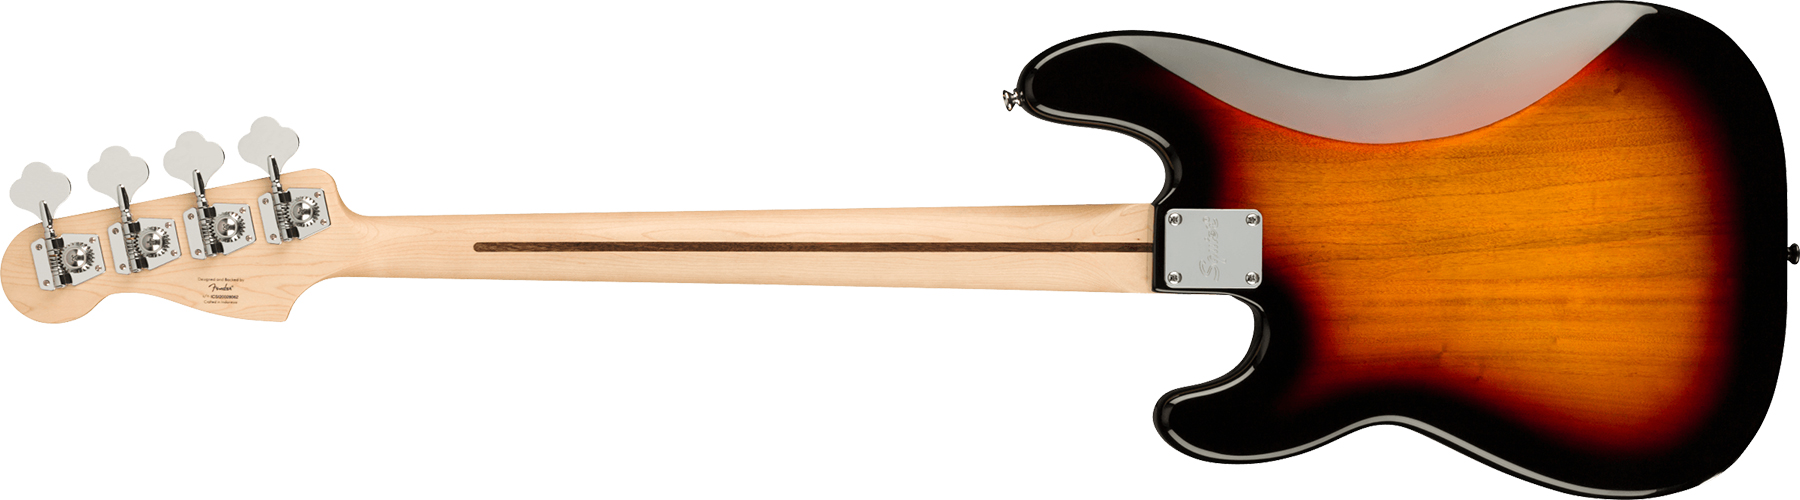 Squier Precision Bass Pj Affinity Pack +fender Rumble 15 V3 2021 Lau - 3-color Sunburst - Elektrische bas set - Variation 2